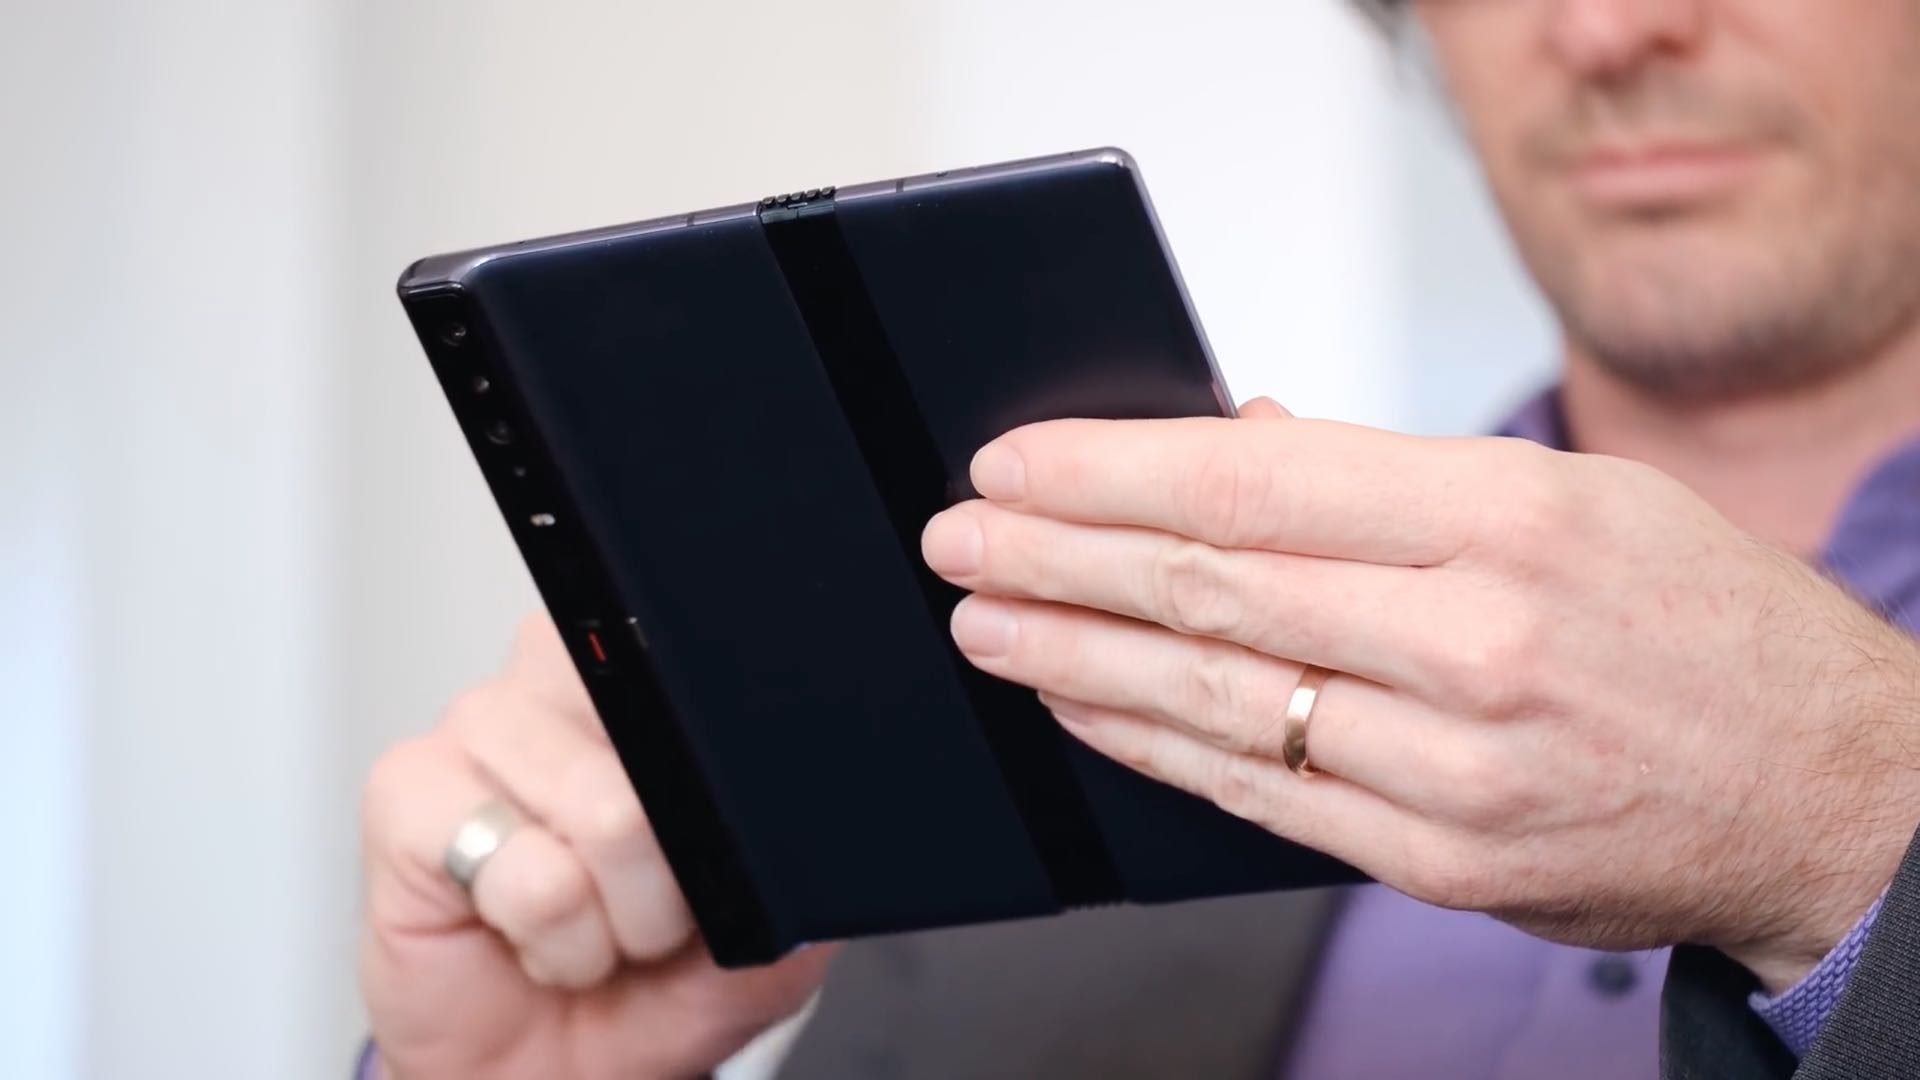 Huawei Mate X foldable smartphone